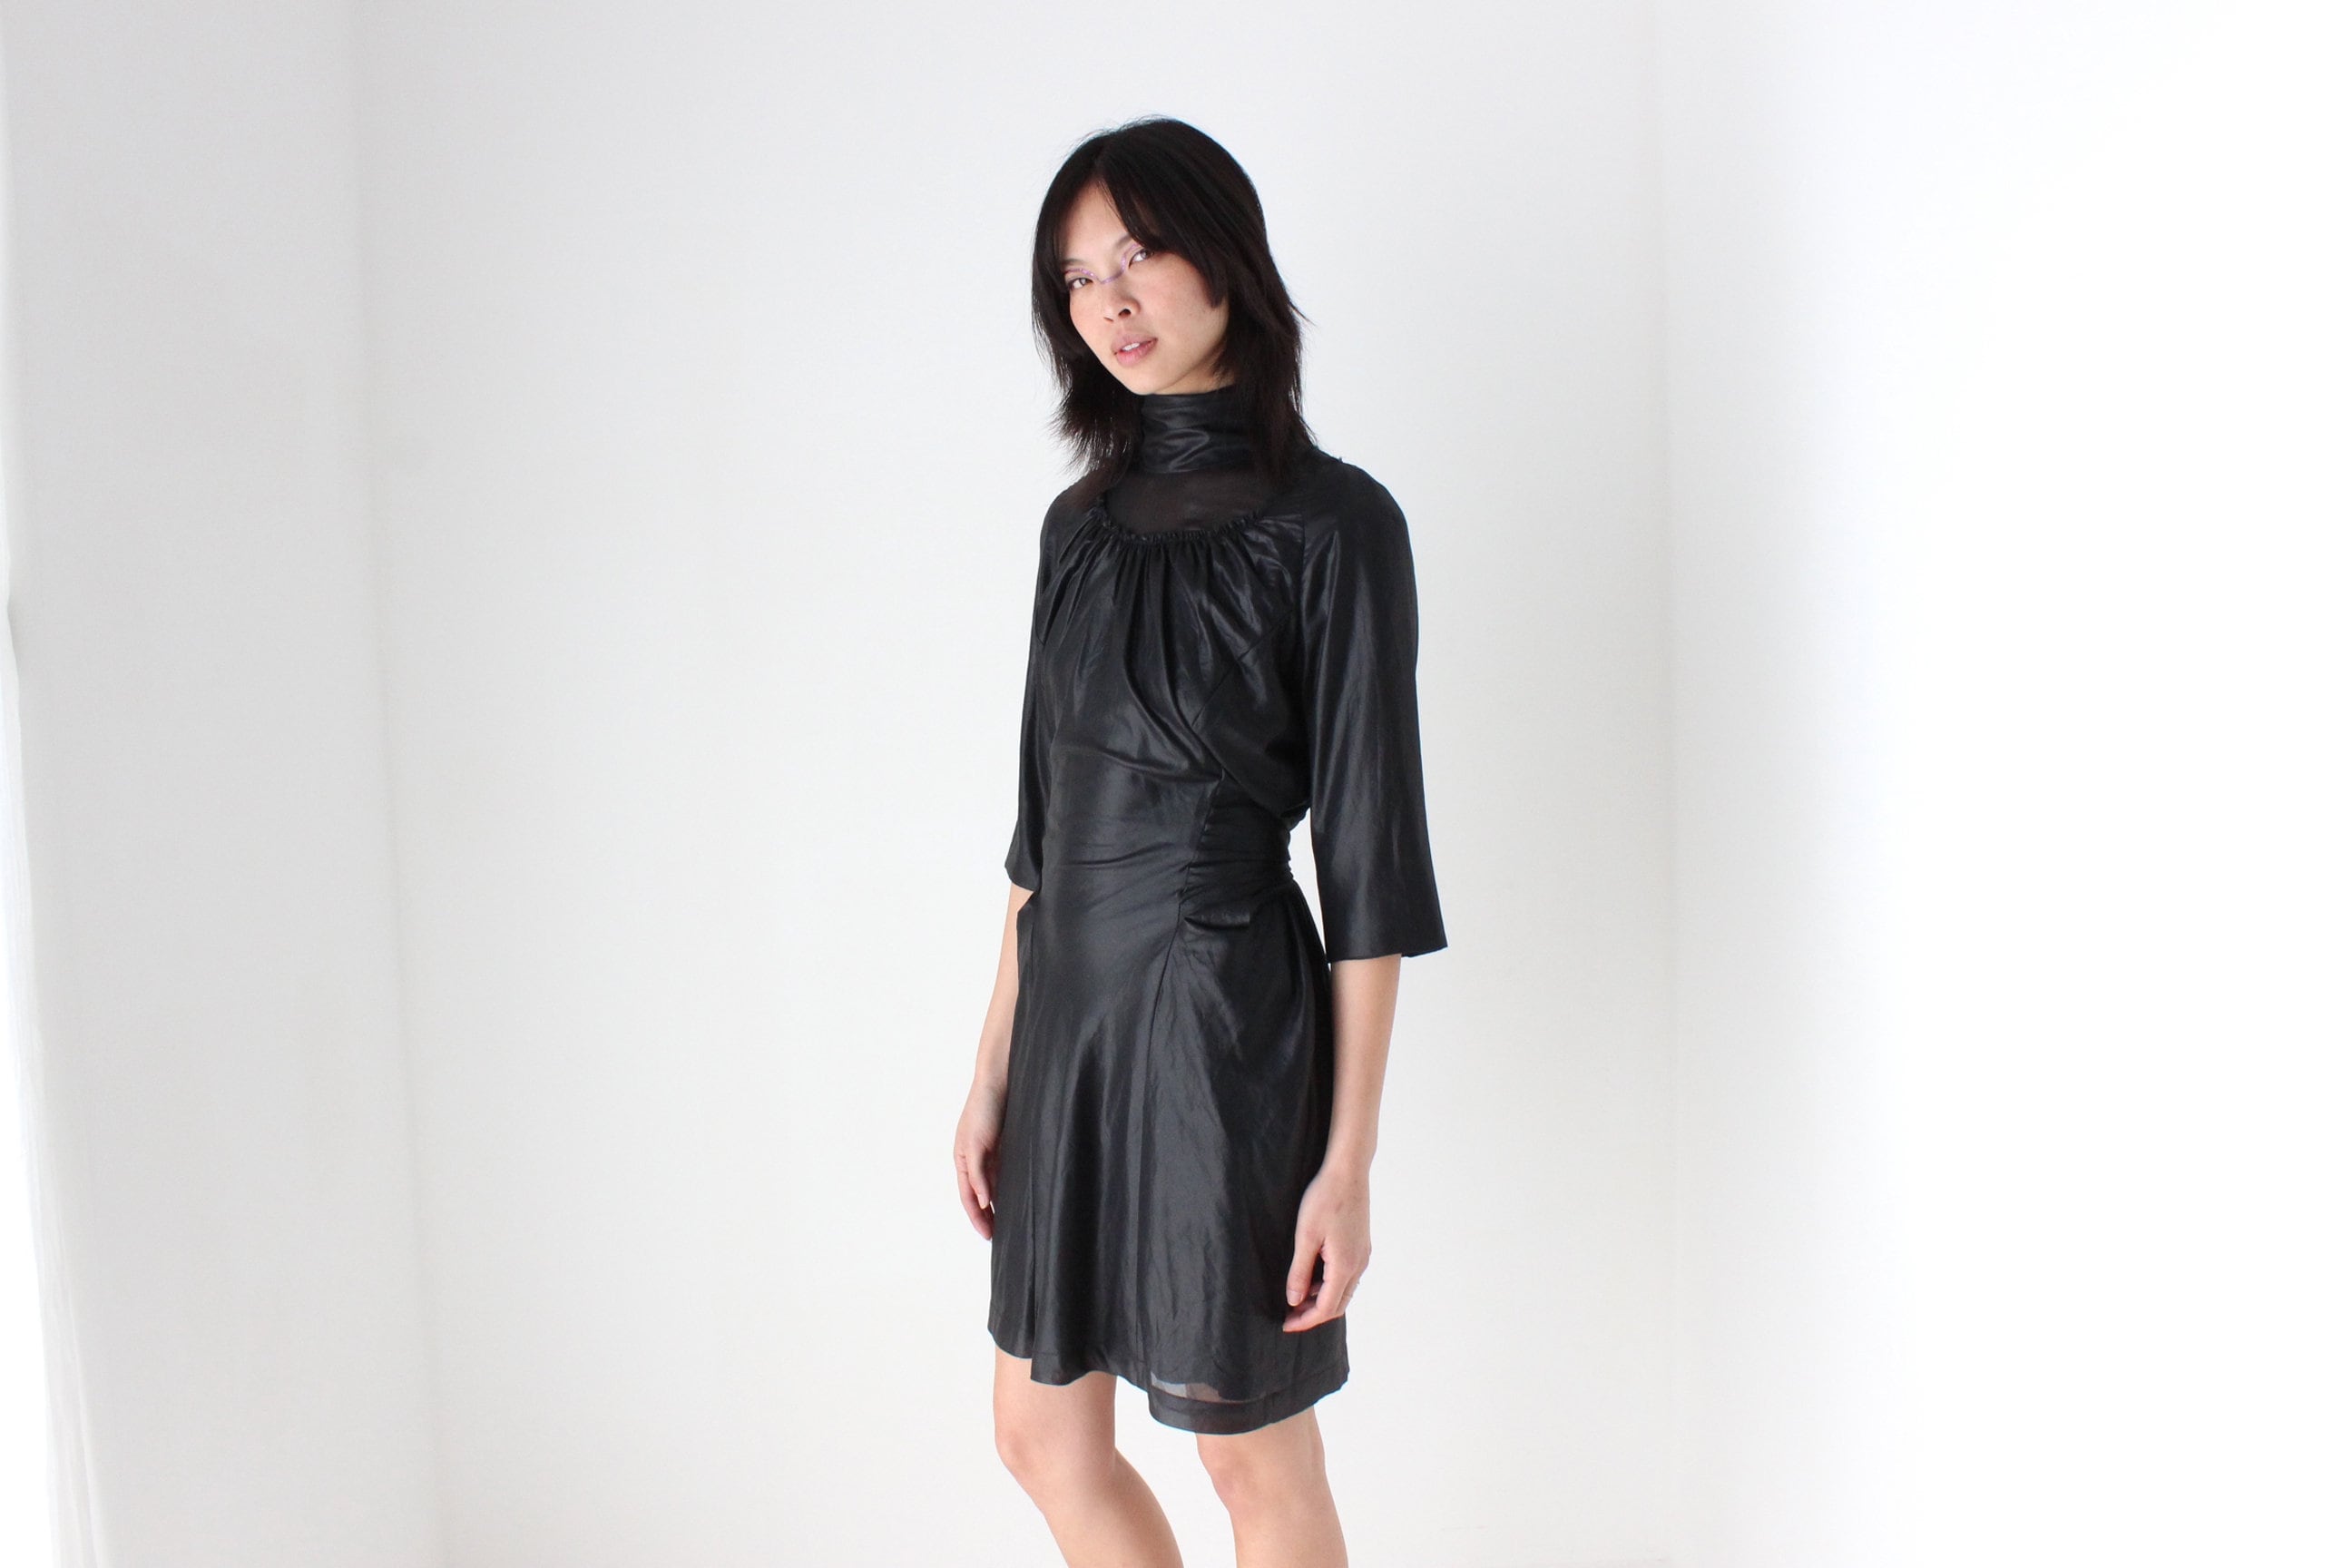 2000s Nicola Finetti Luxury Metallic Leather-Look Party Dress